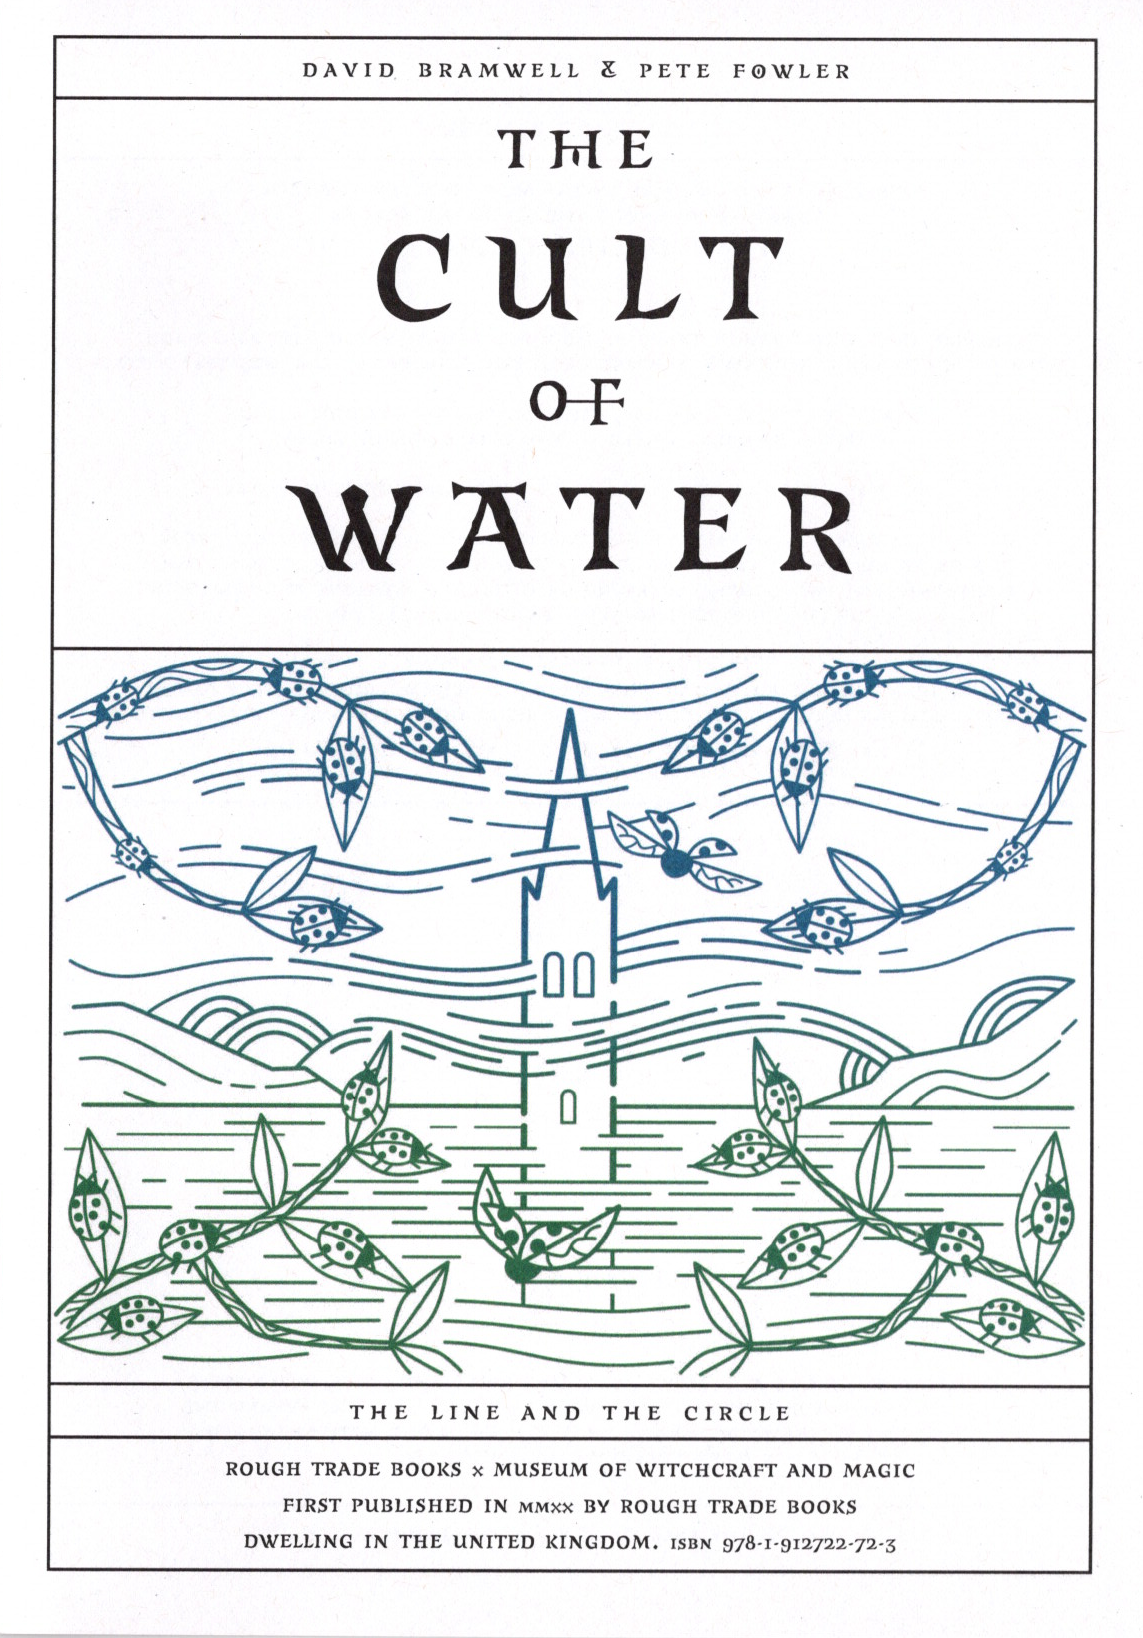 The Cult of Water, David Bramwell & Pete Fowler